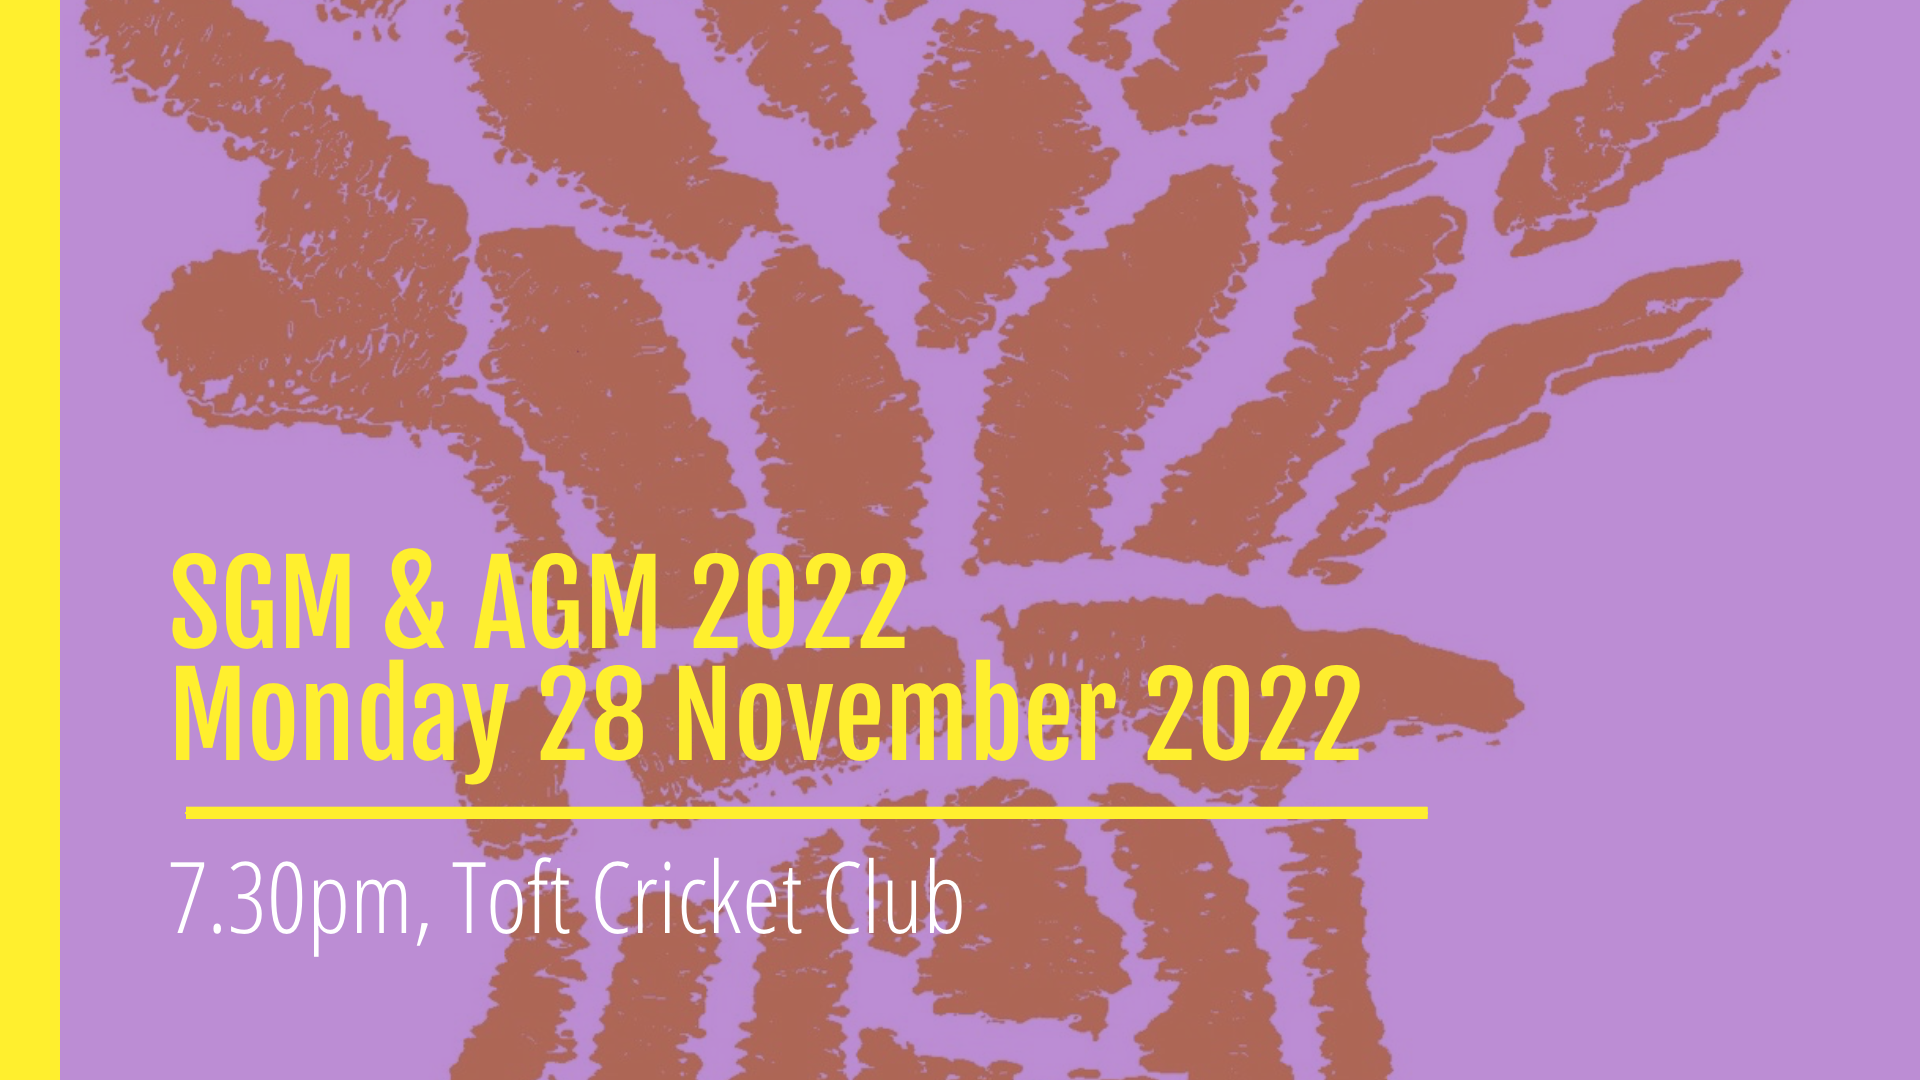 Notice of SGM & AGM, 7.30pm Monday 28 November 2022